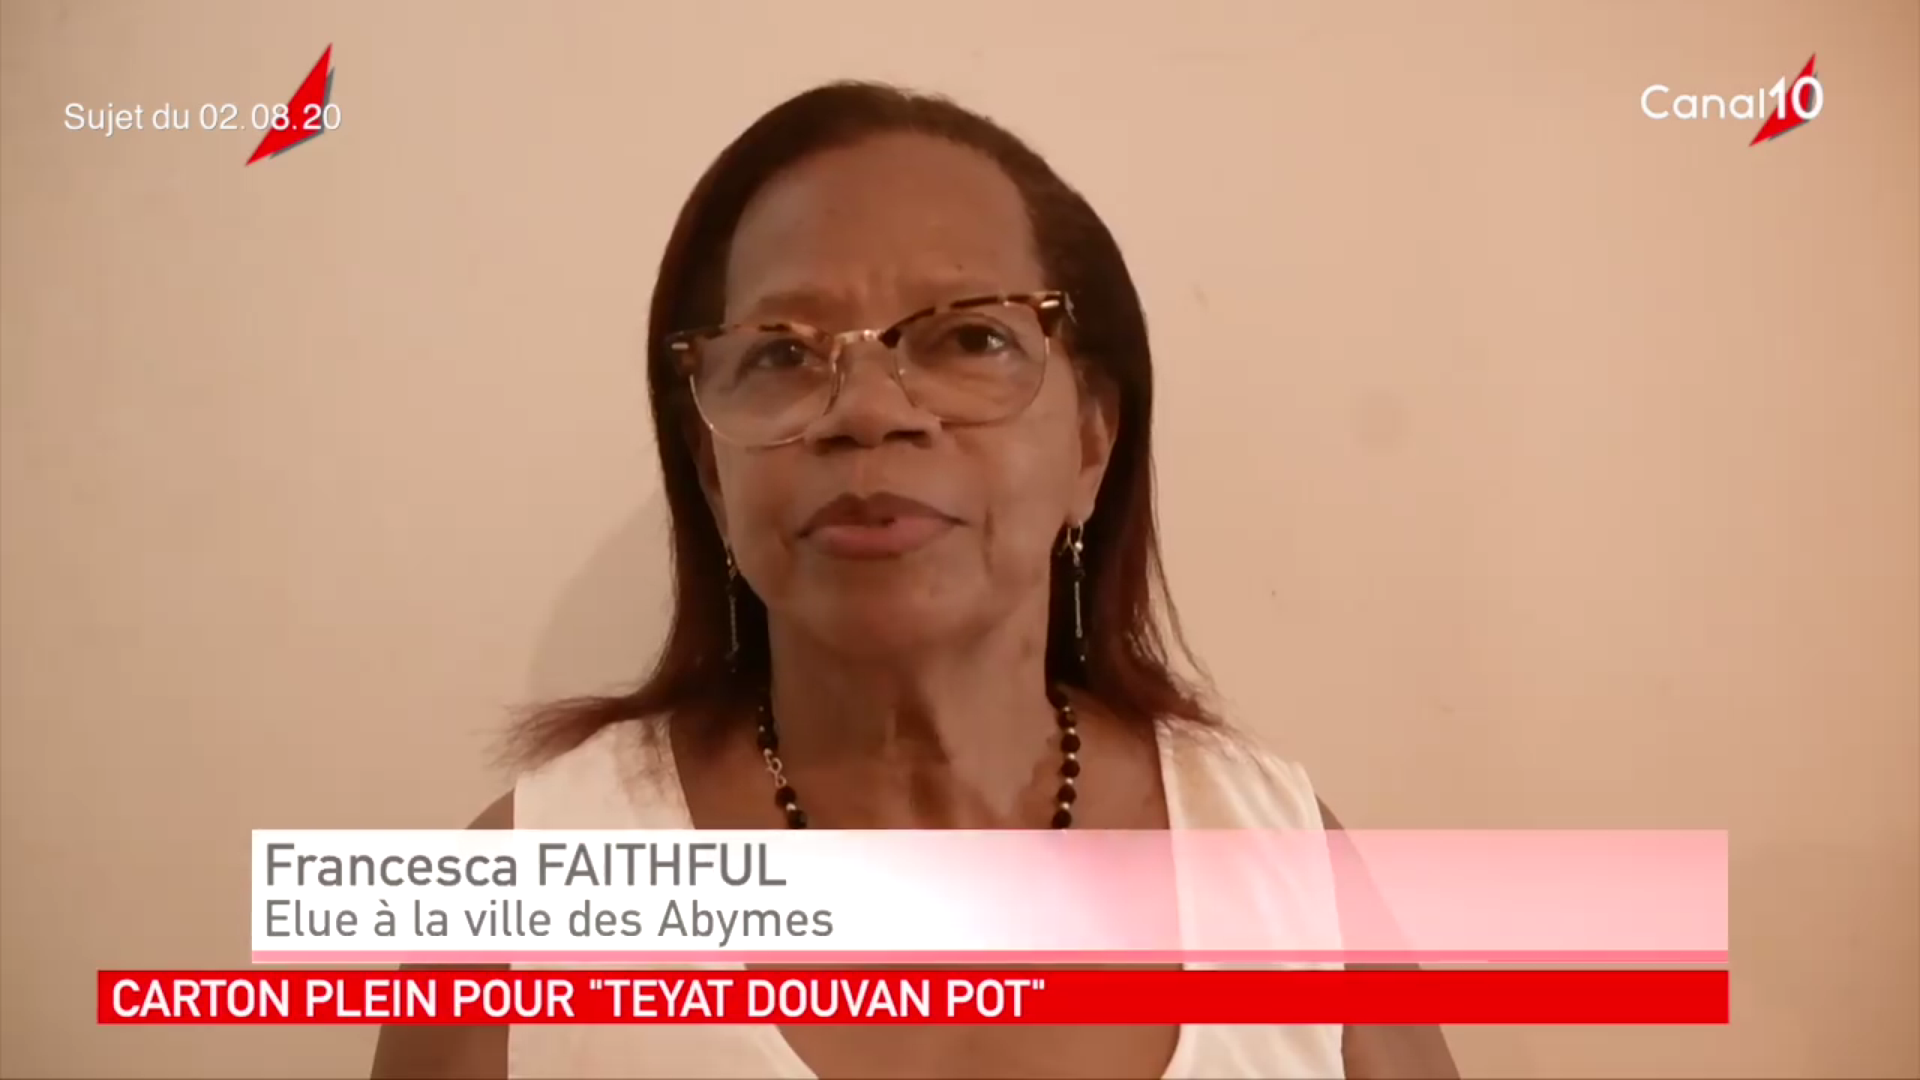 [Vidéo] Onews Guadeloupe. Succès pour Téyat douvan pot (Canal 10)